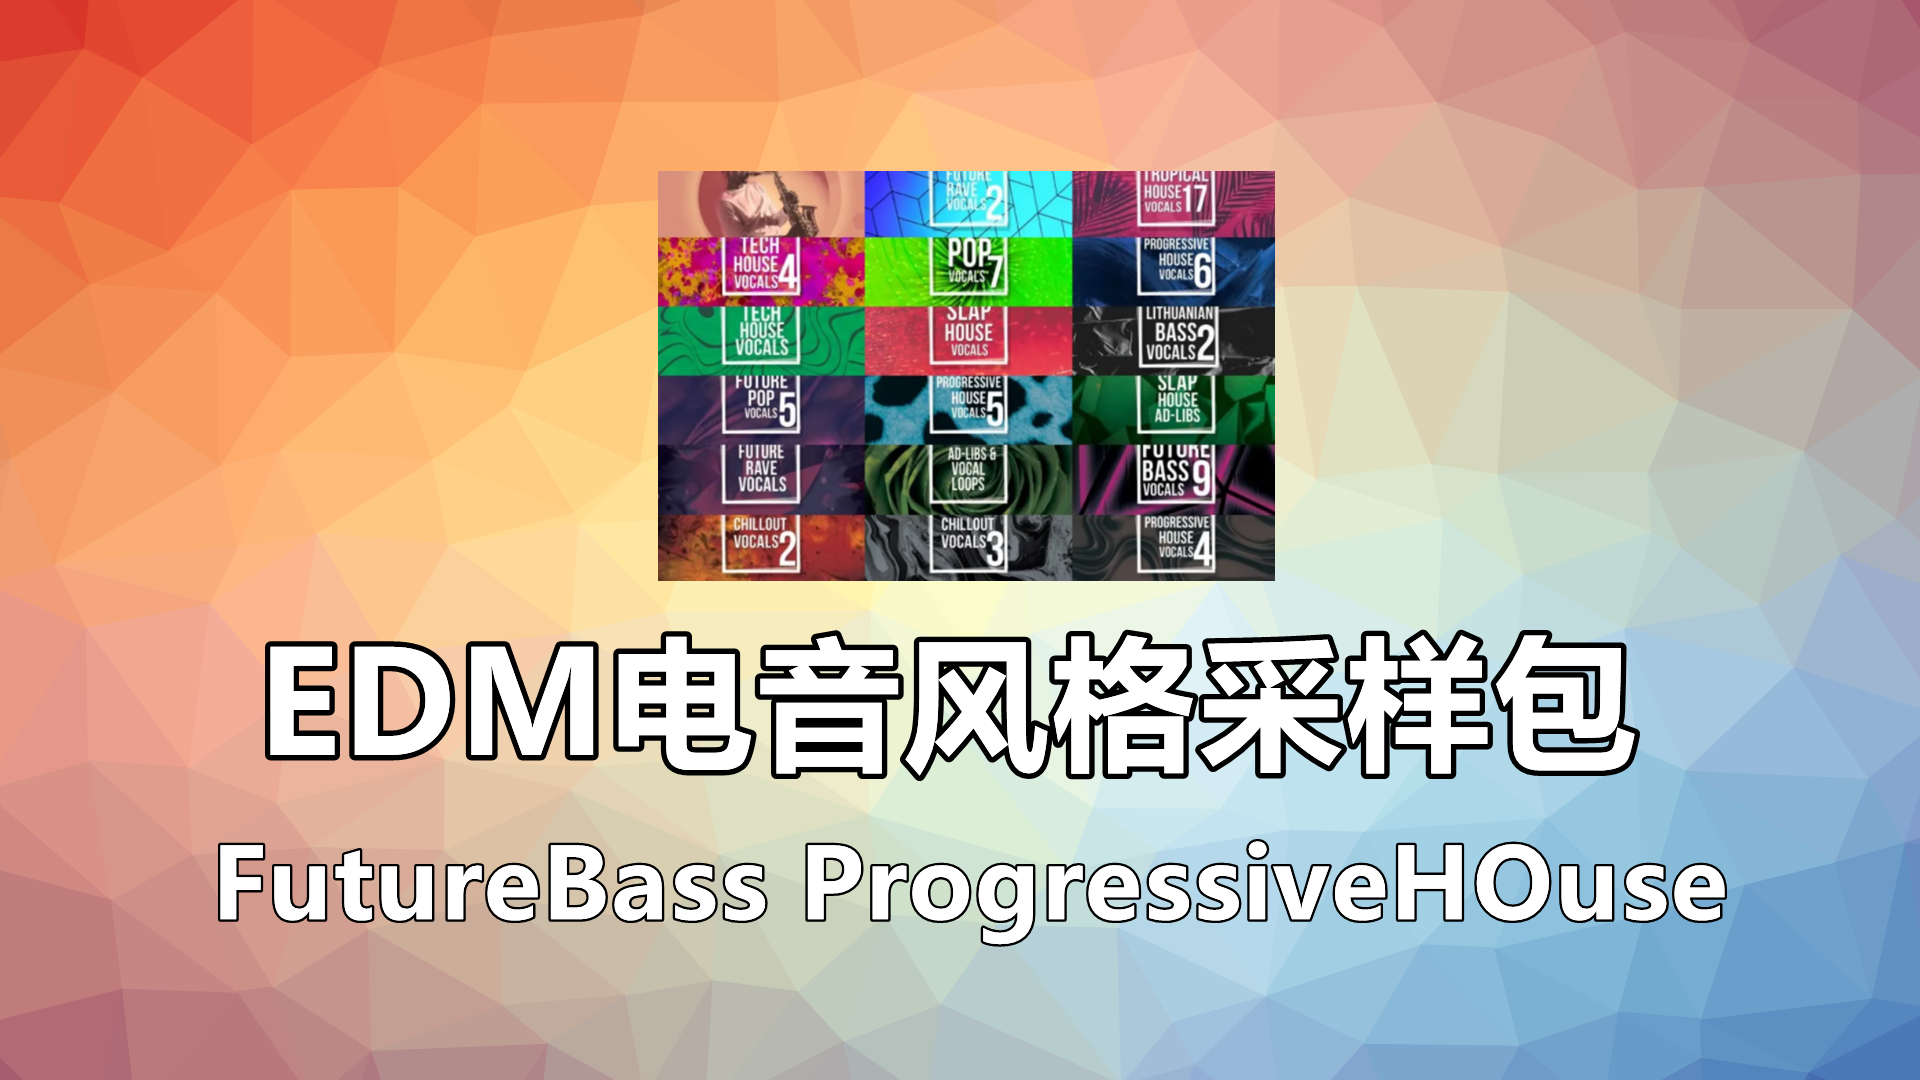 EDM电音风格人声采样包大合集【Vocal Sample 电子人声采样包】Progrssive House Future Bass【Vocals】